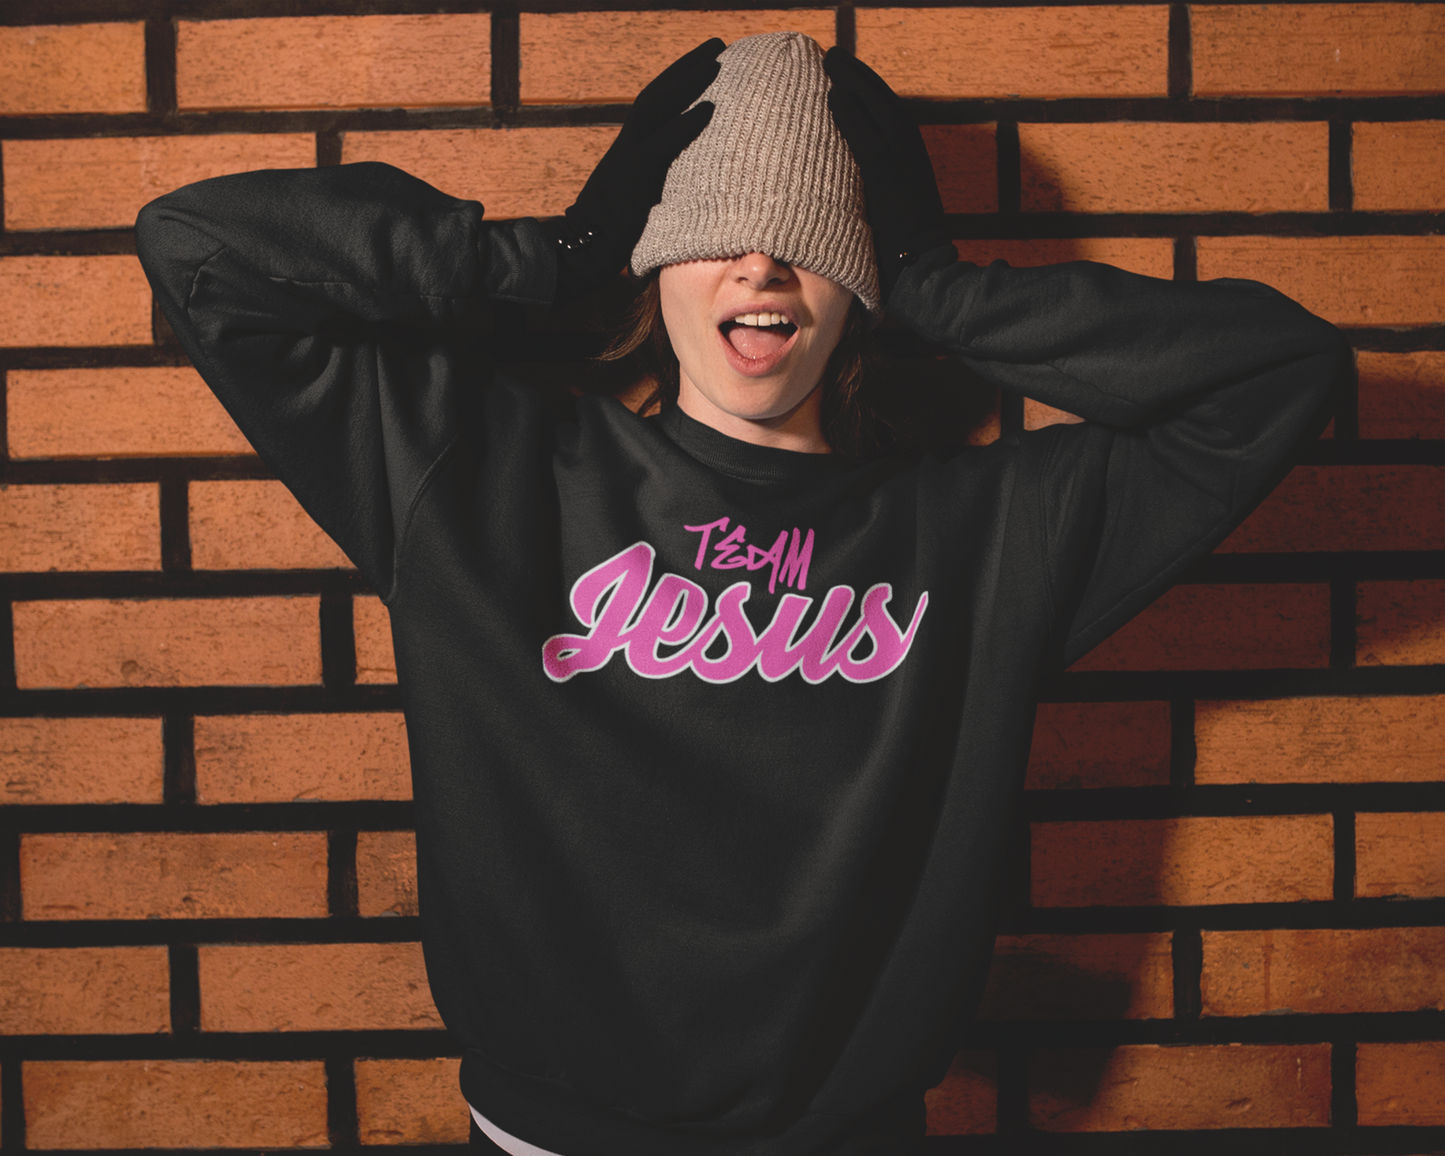 Team Jesus Womens Sweatshirt 2